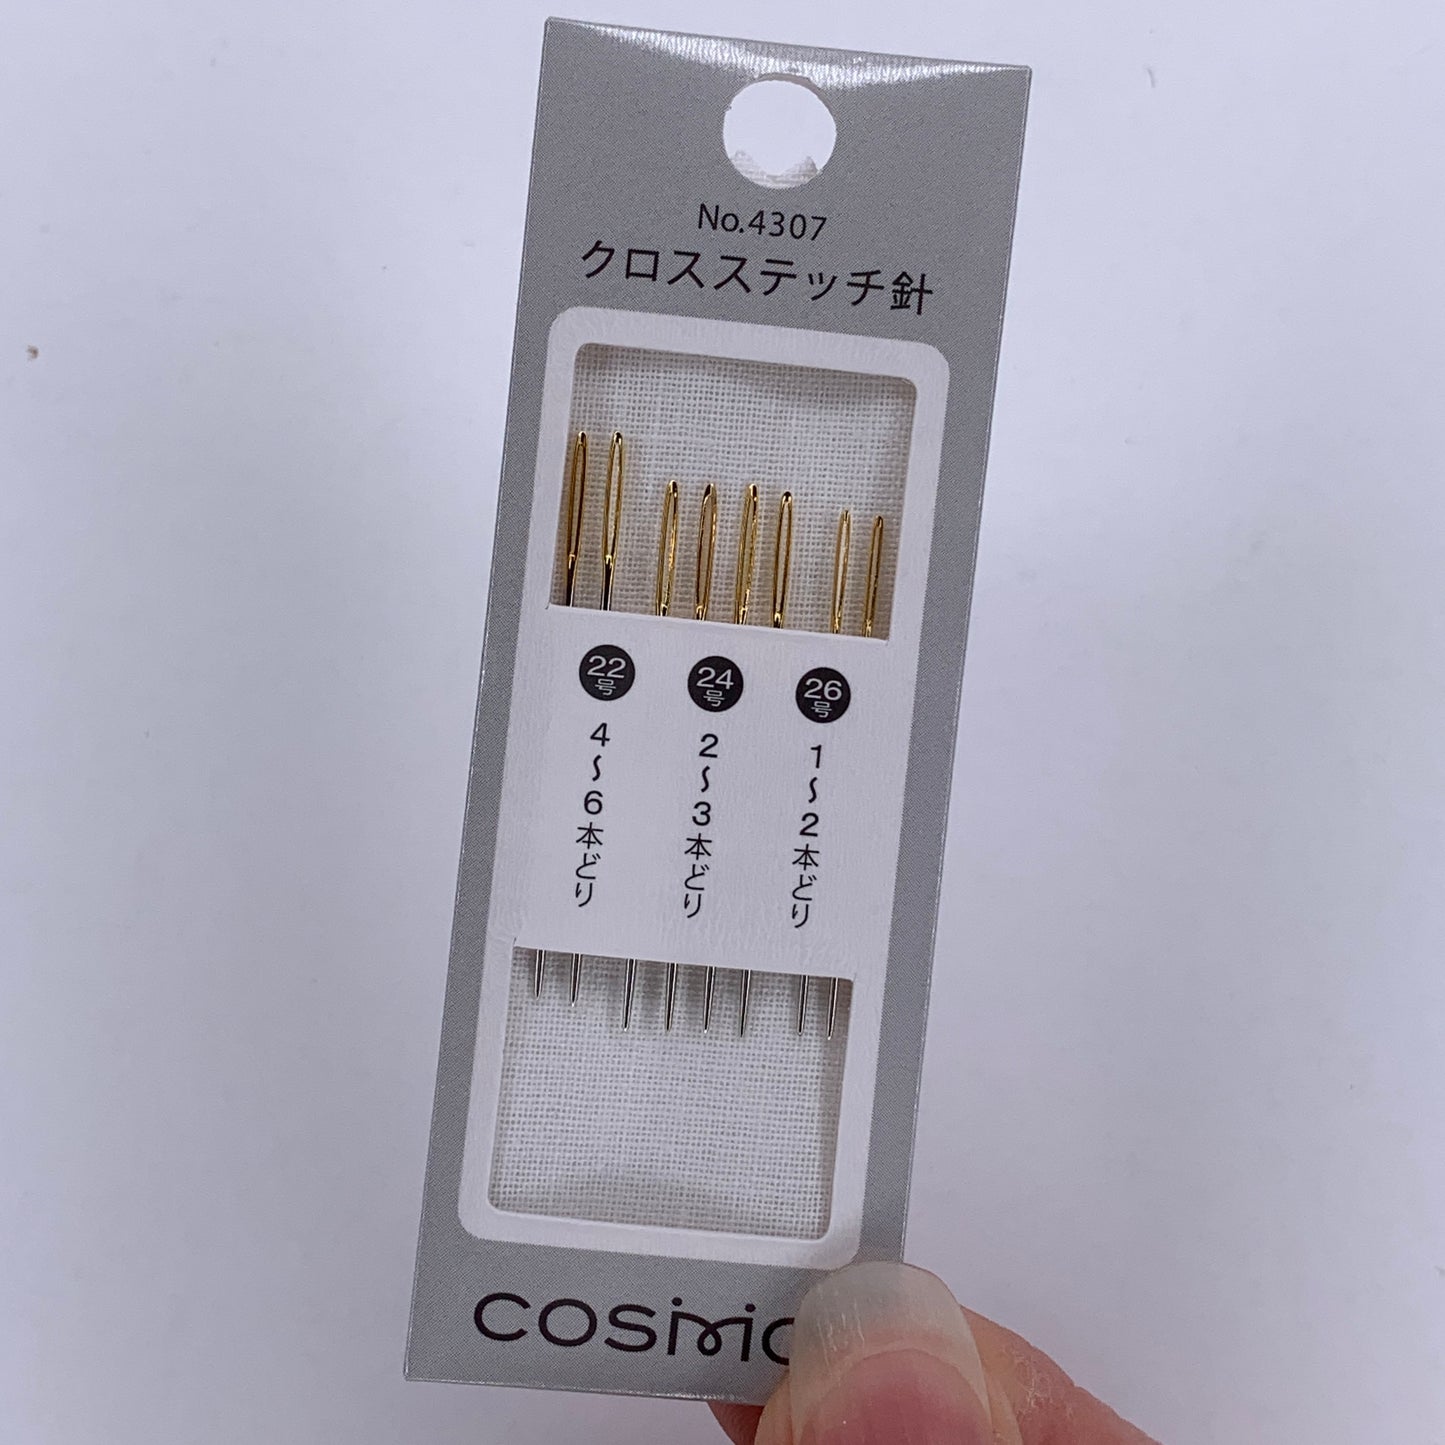 Cosmo Cross Stitch Needles, Assorted Sizes 22/24/26